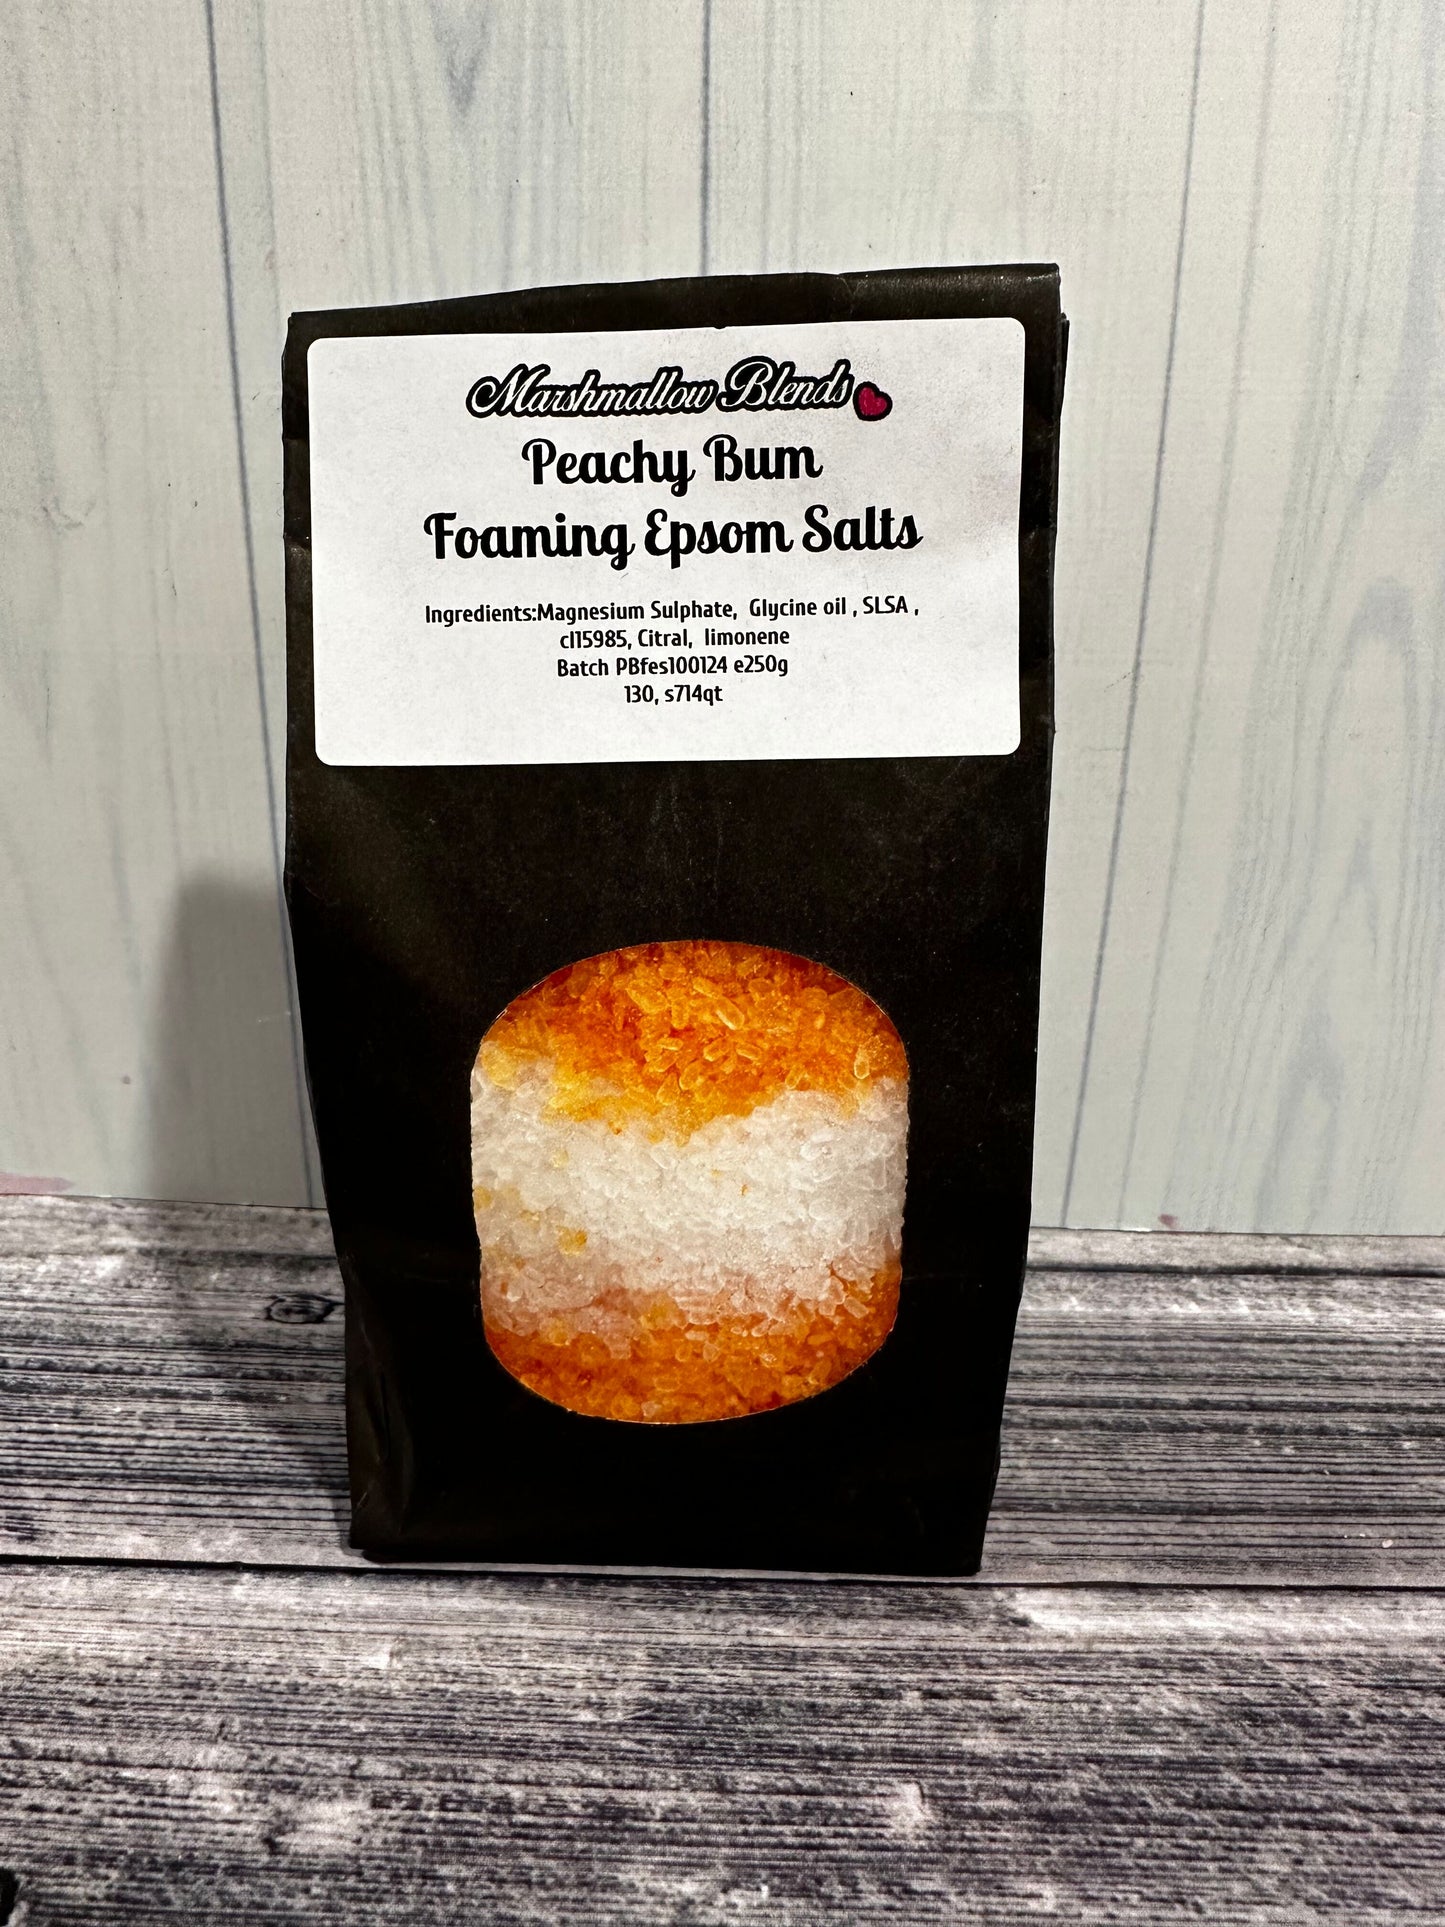 Peachy Bum Foaming Epsom Salts